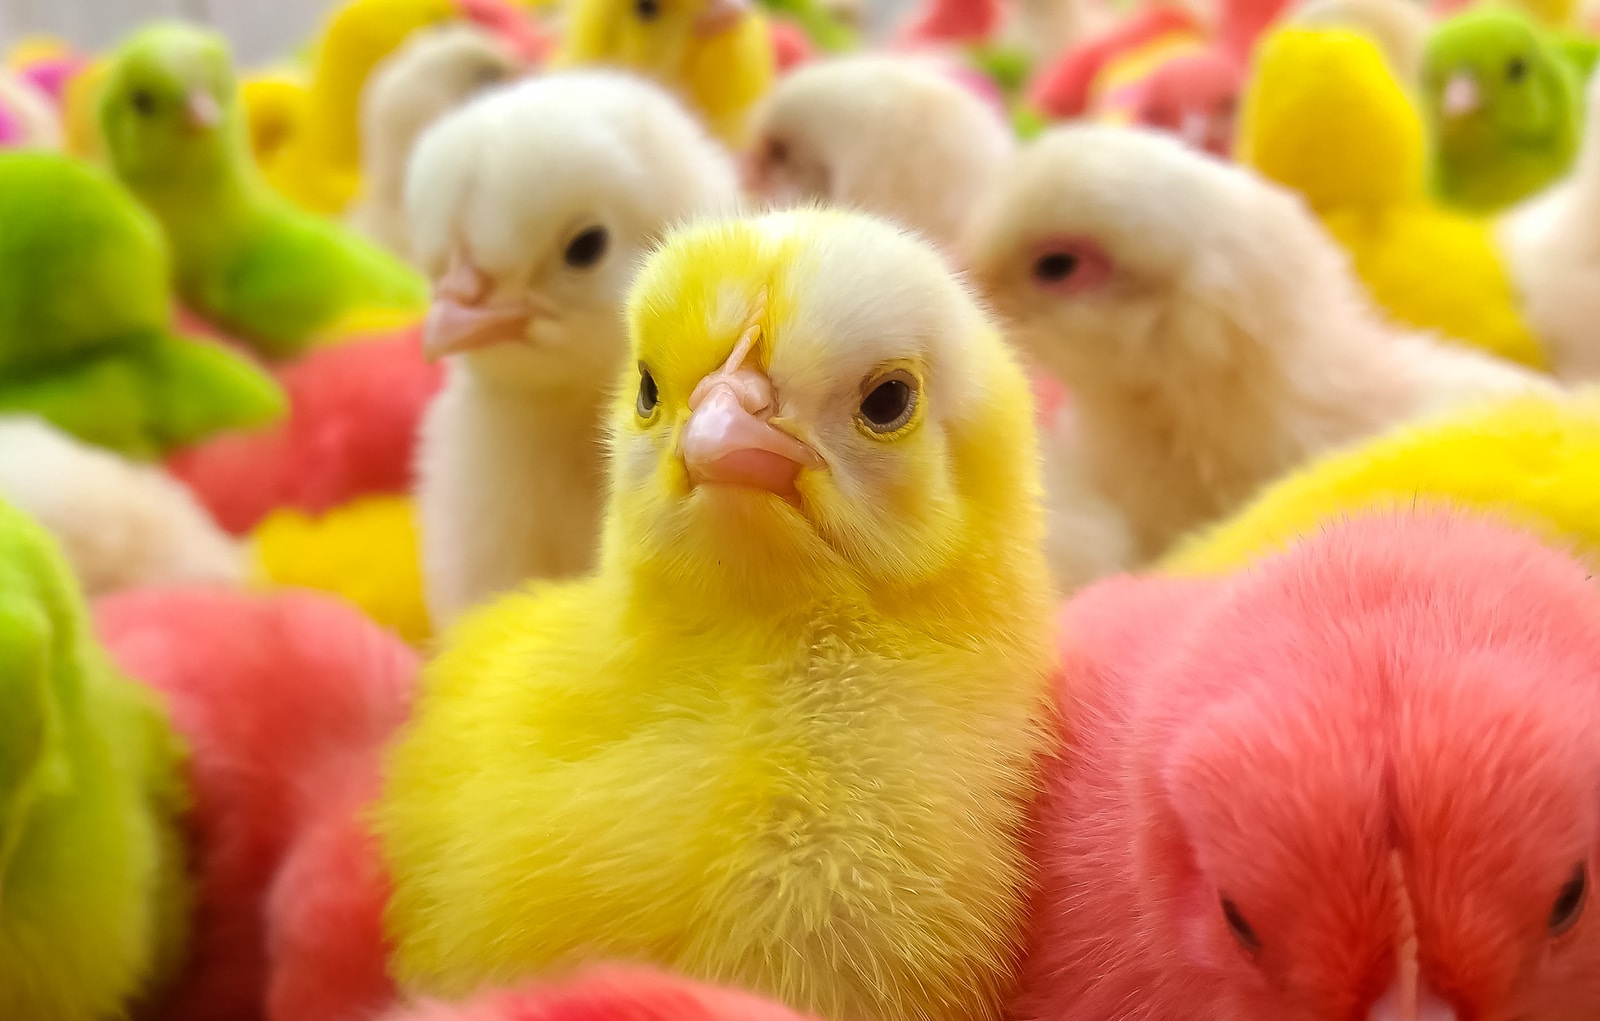 flock of chicken chicks